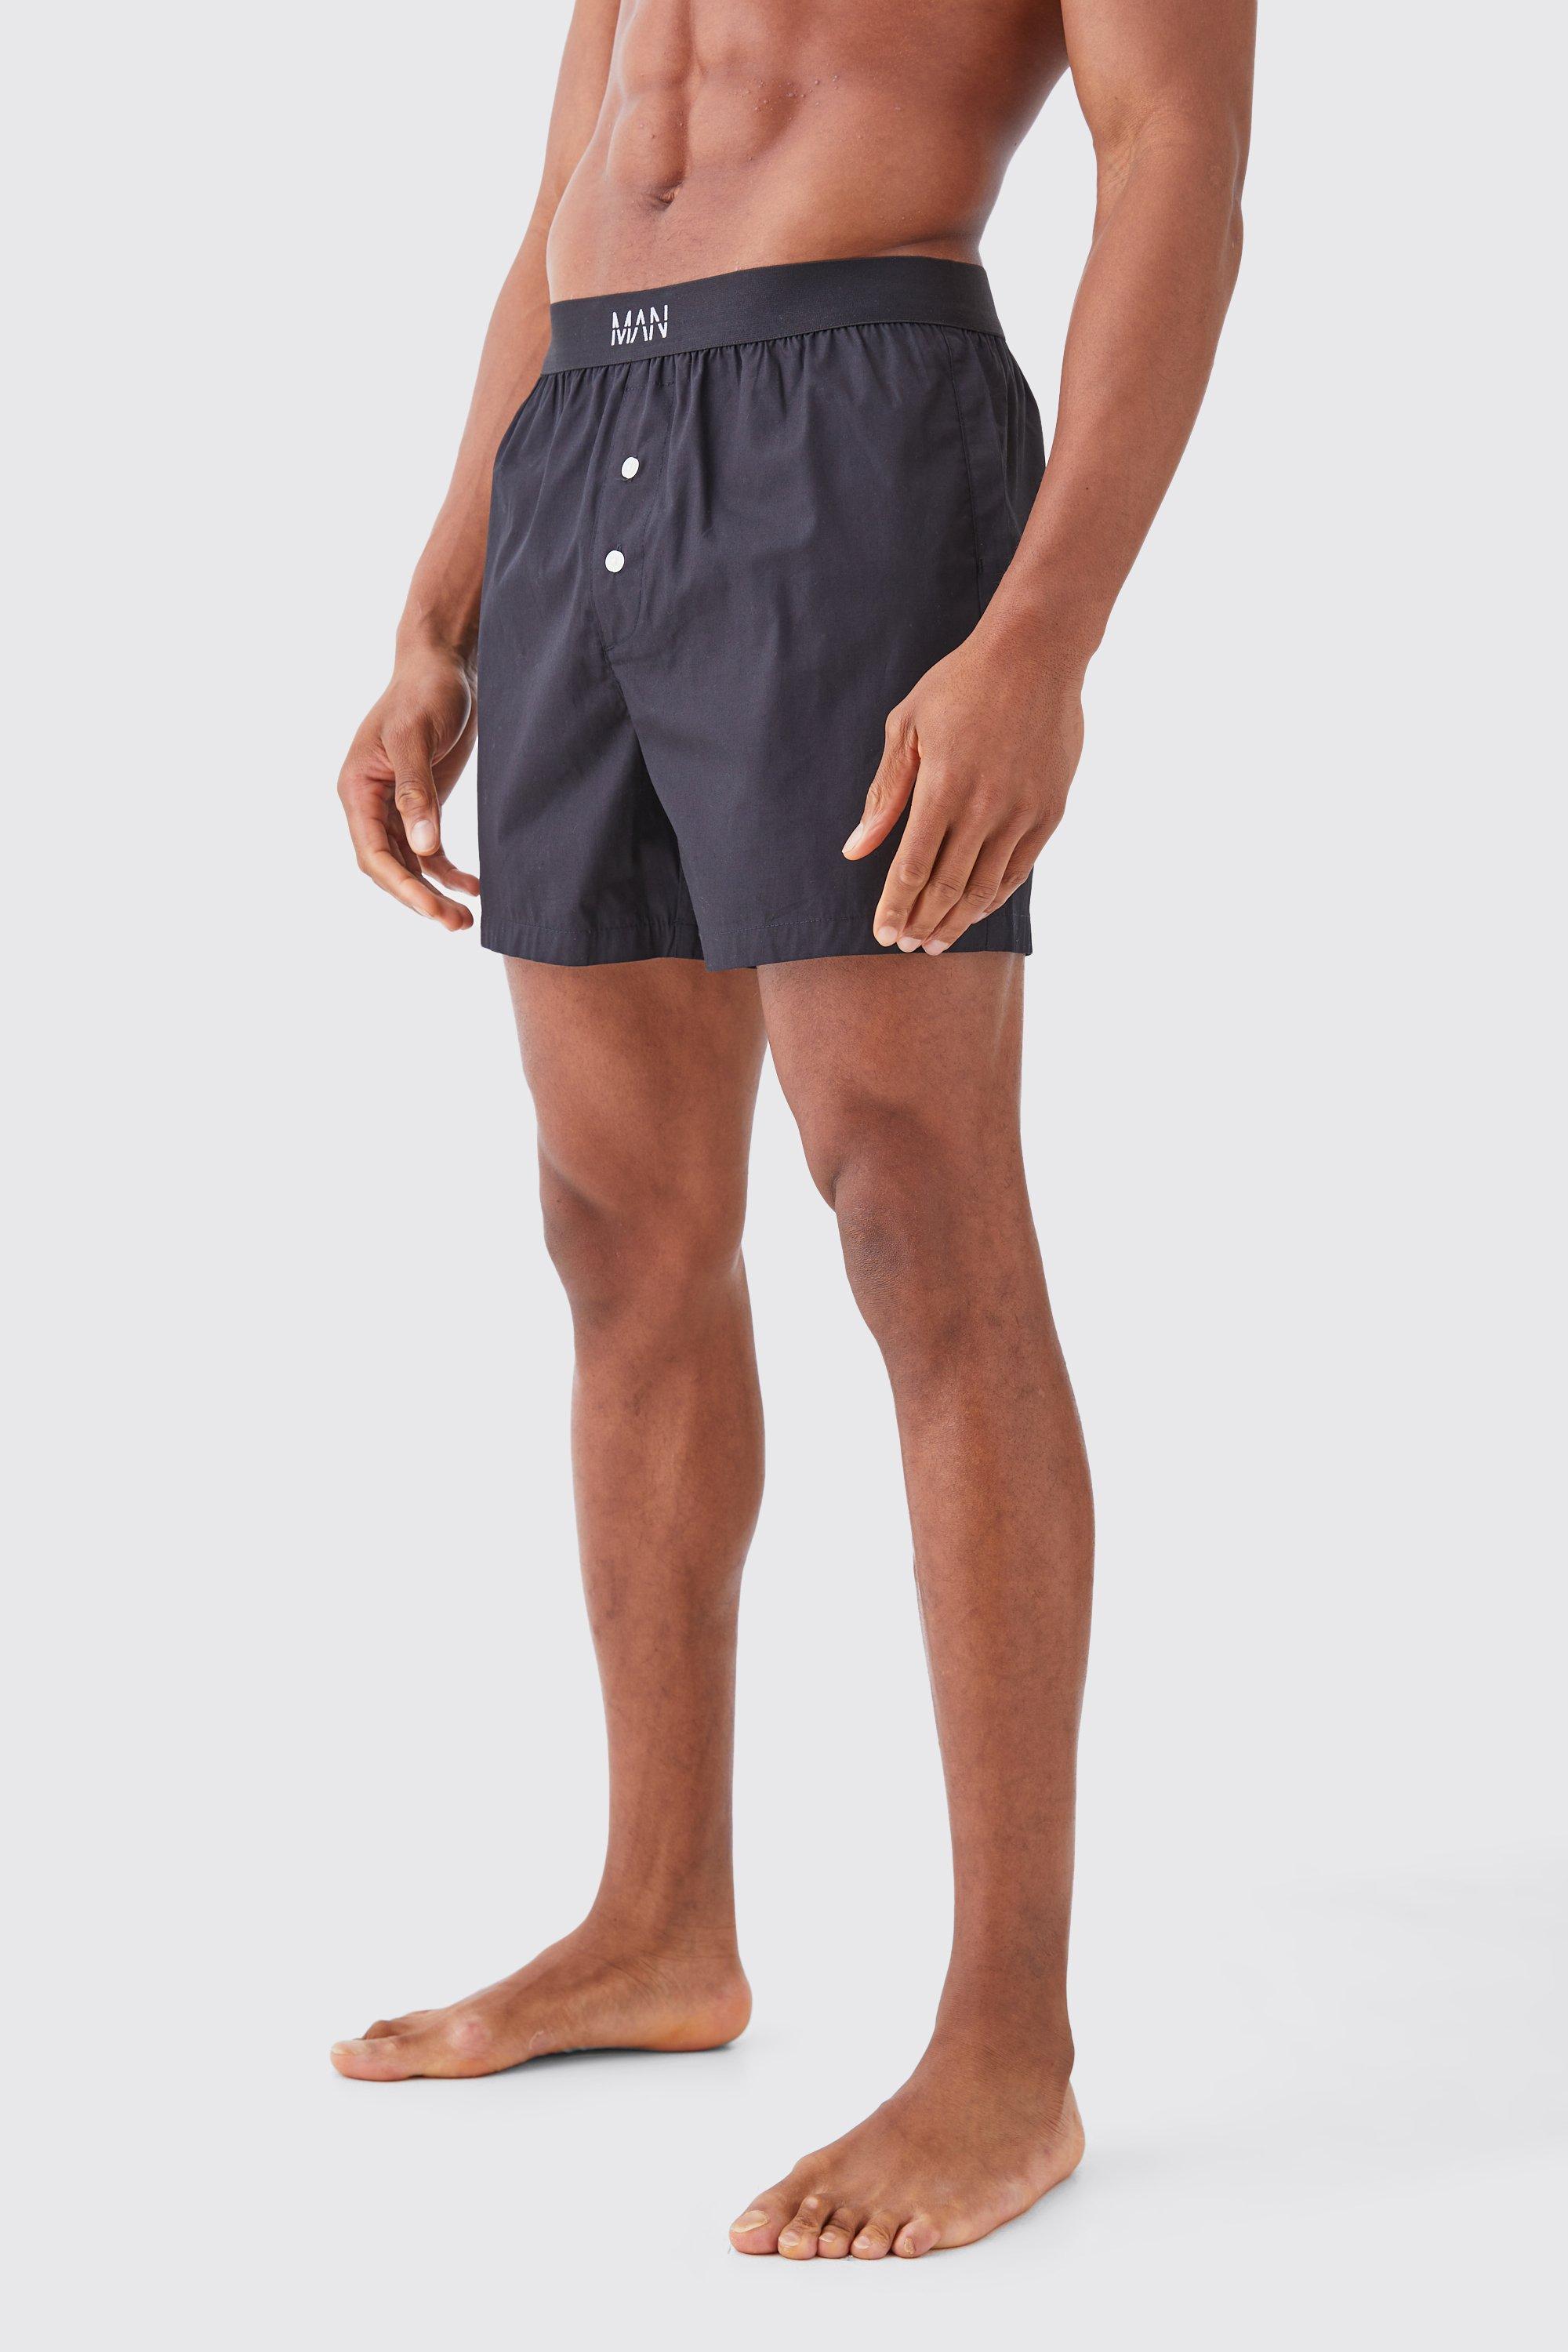 Mens Black Original Man Woven Boxer Shorts